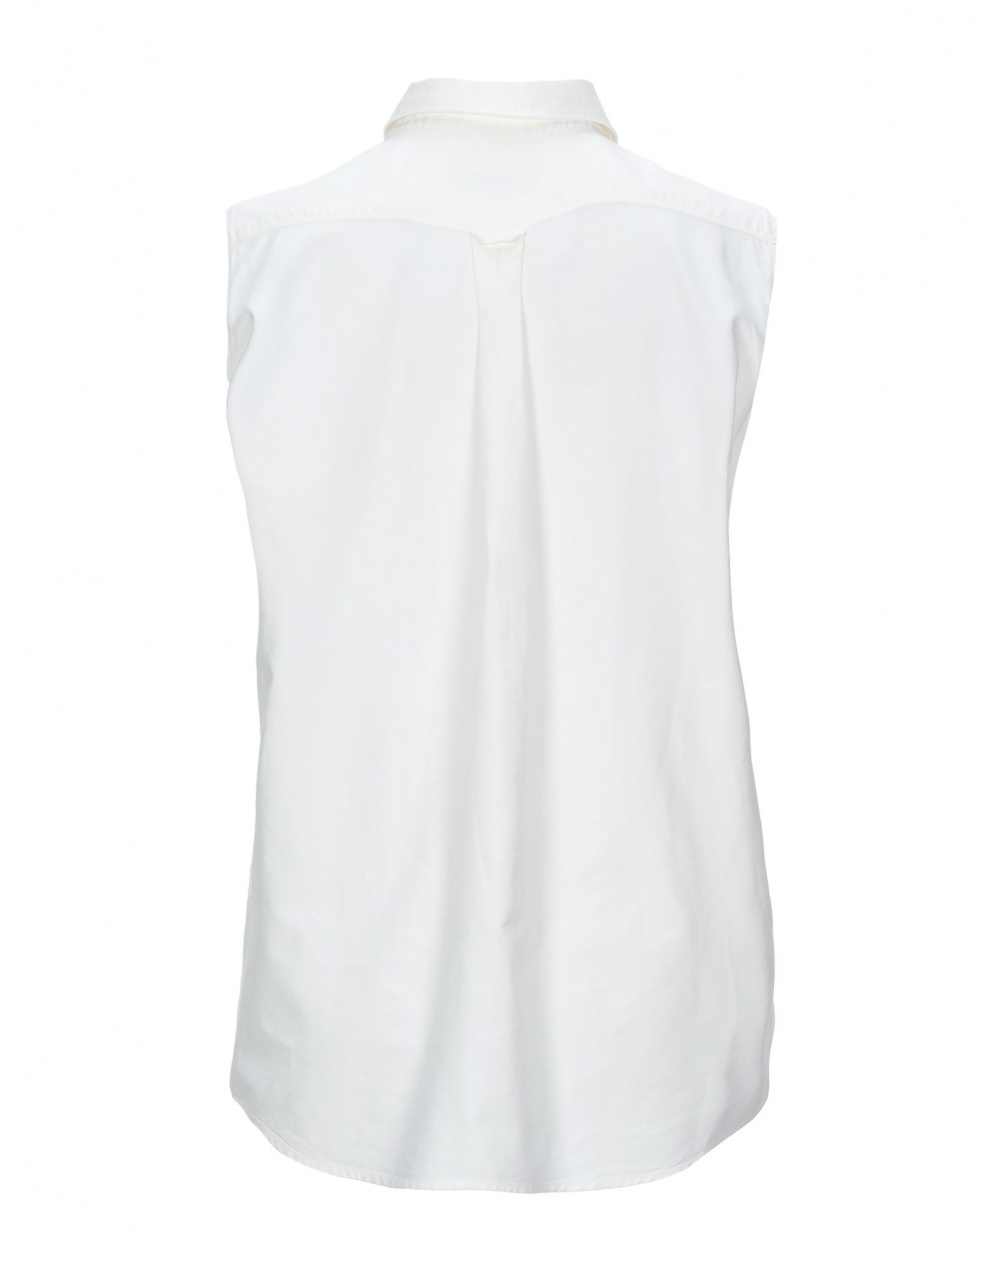 Рубашка MAURO GRIFONI на 46-48 размер